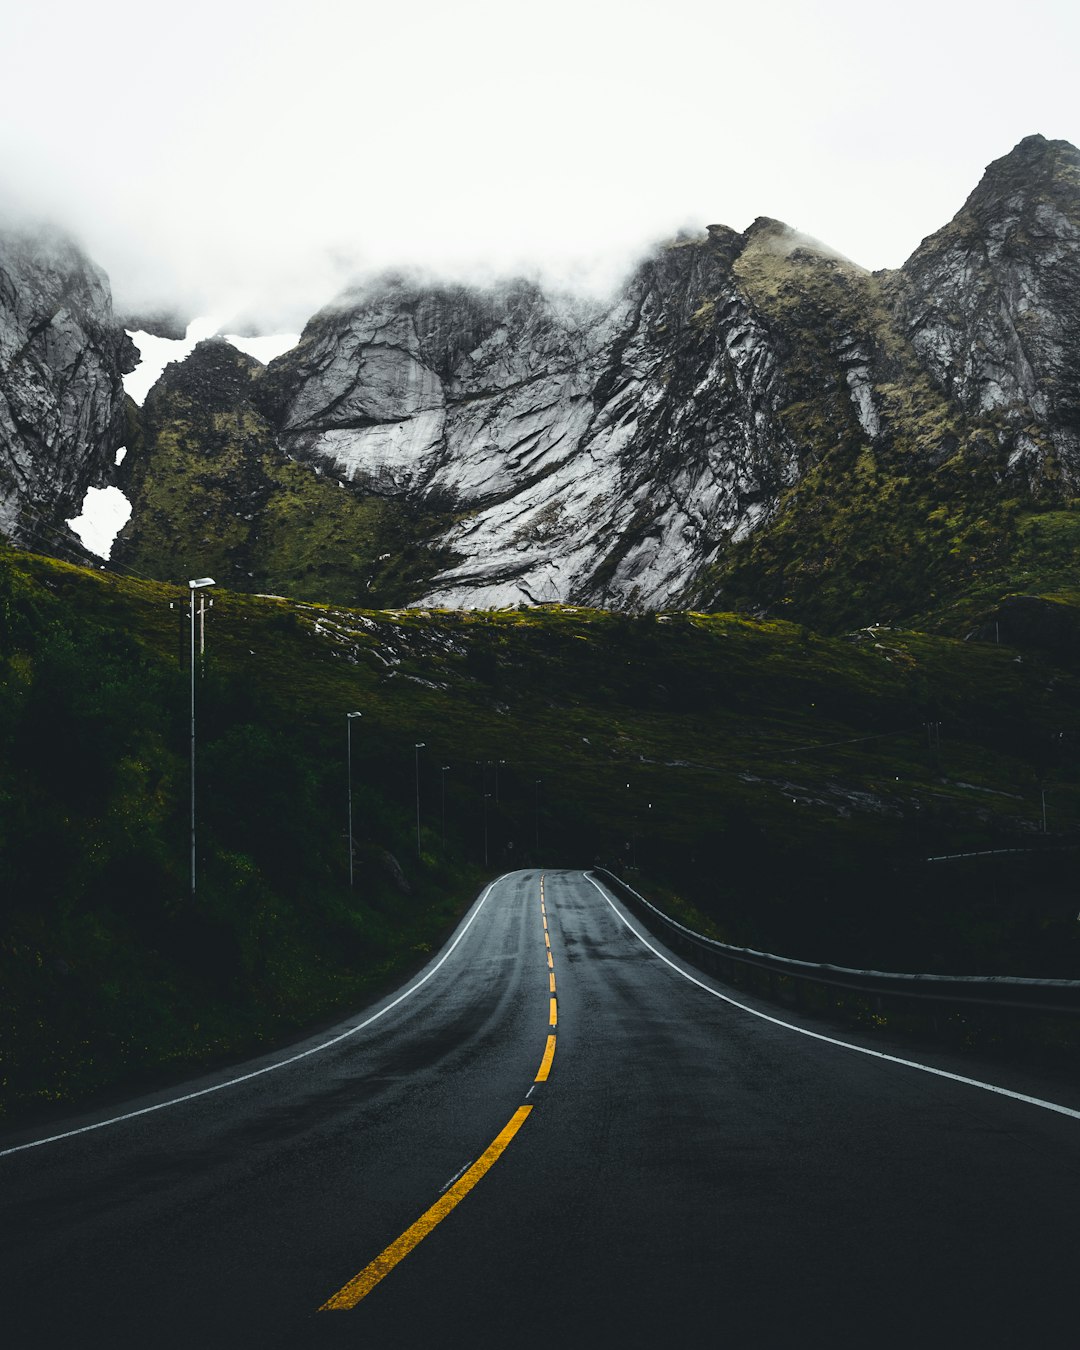 travelers stories about Road trip in Lofoten Islands, Norway